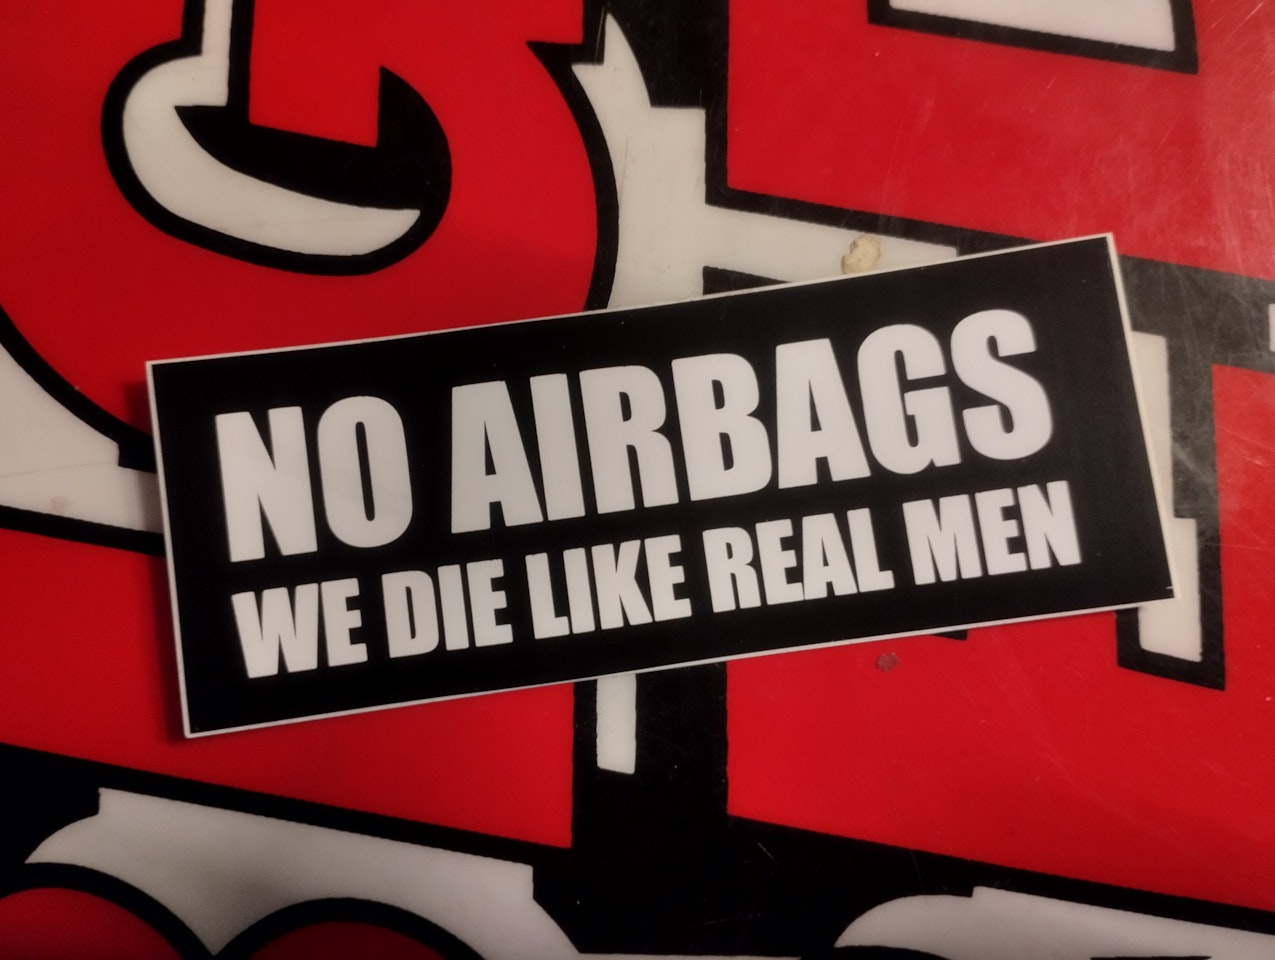 No Airbags dekal